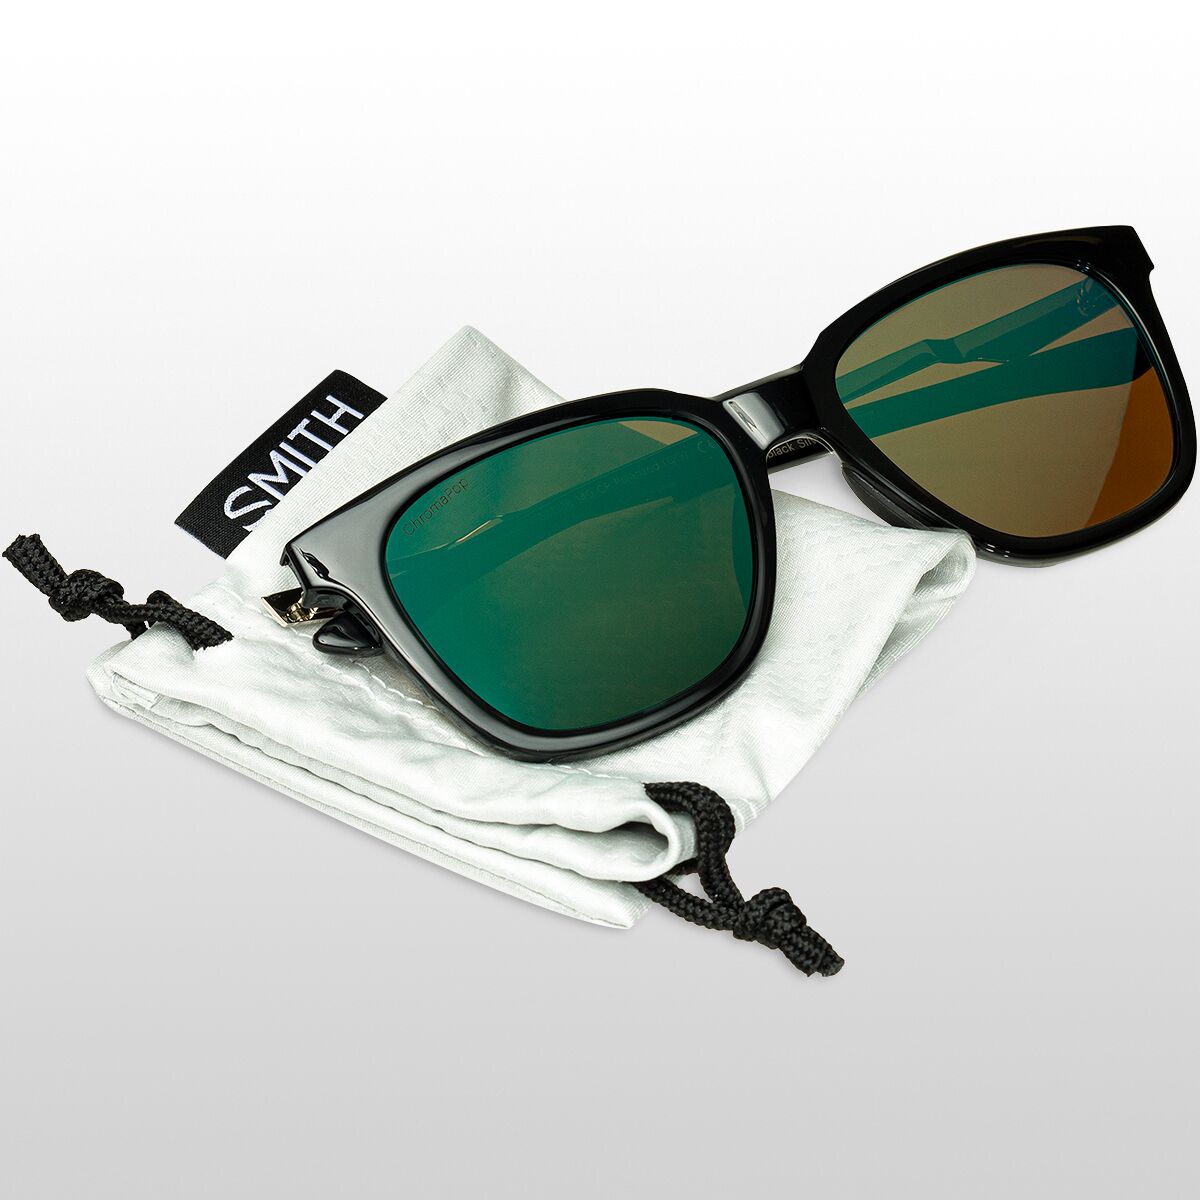 Smith Roam ChromaPop Polarized Sunglasses - Accessories